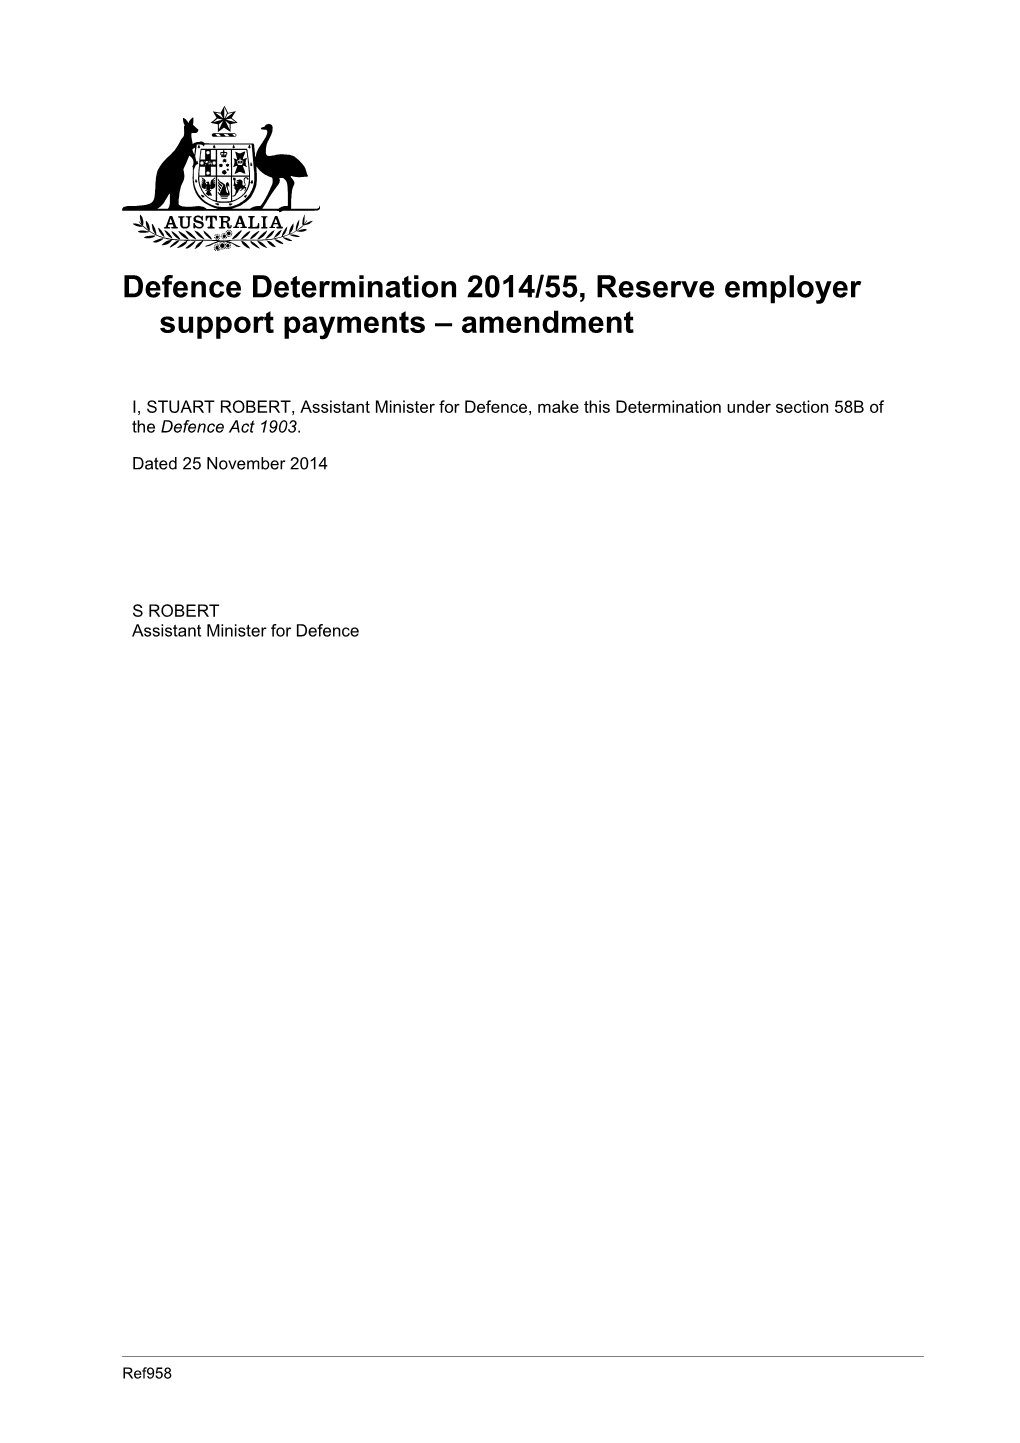 Defence Determination 2014/55,Reserve Employer Support Payments Amendment